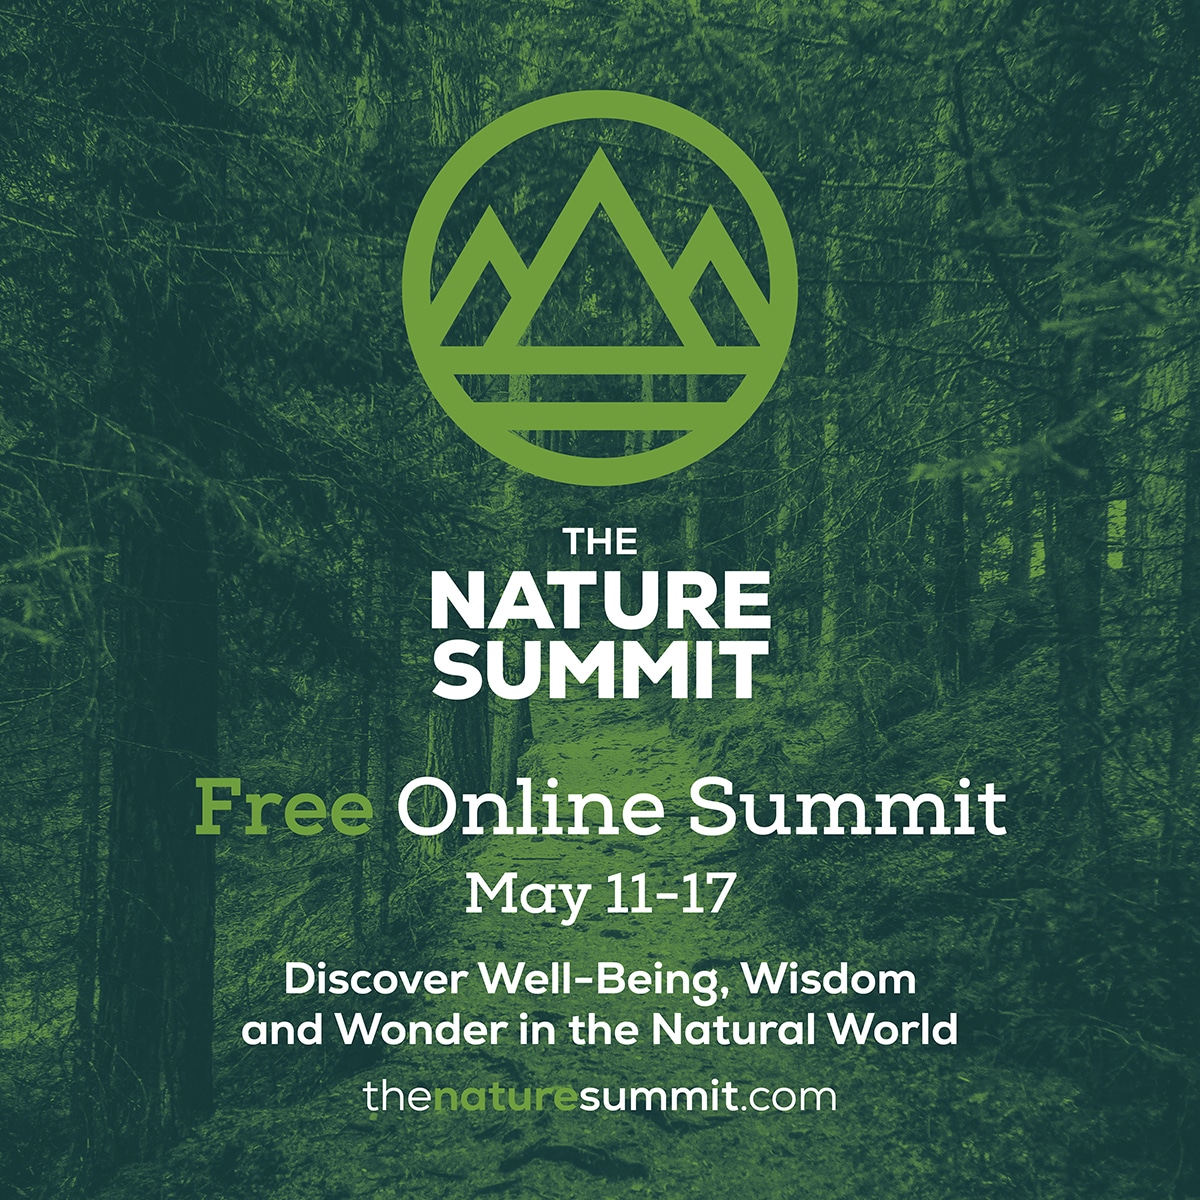 The Nature Summit